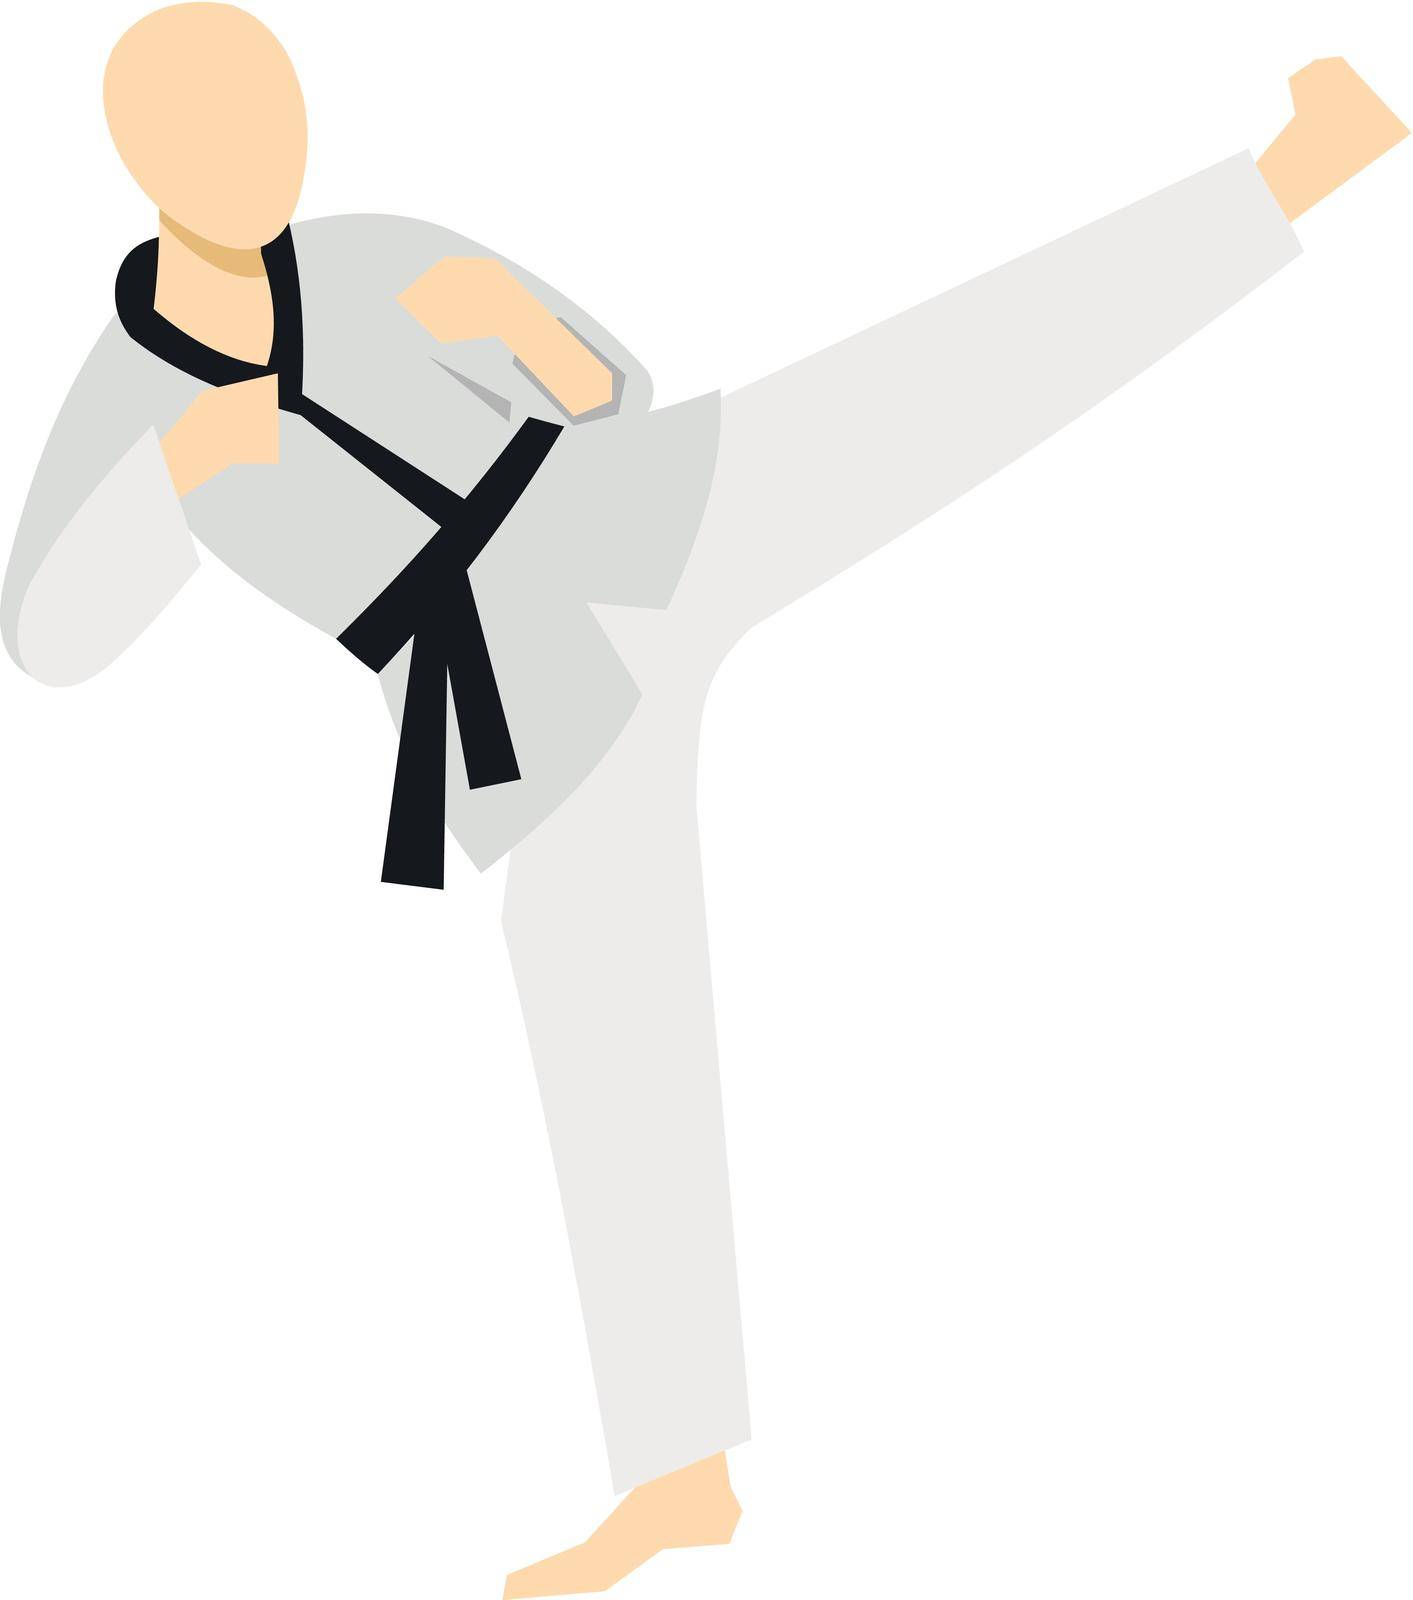 Wushu fighting style icon, flat style by ylivdesign